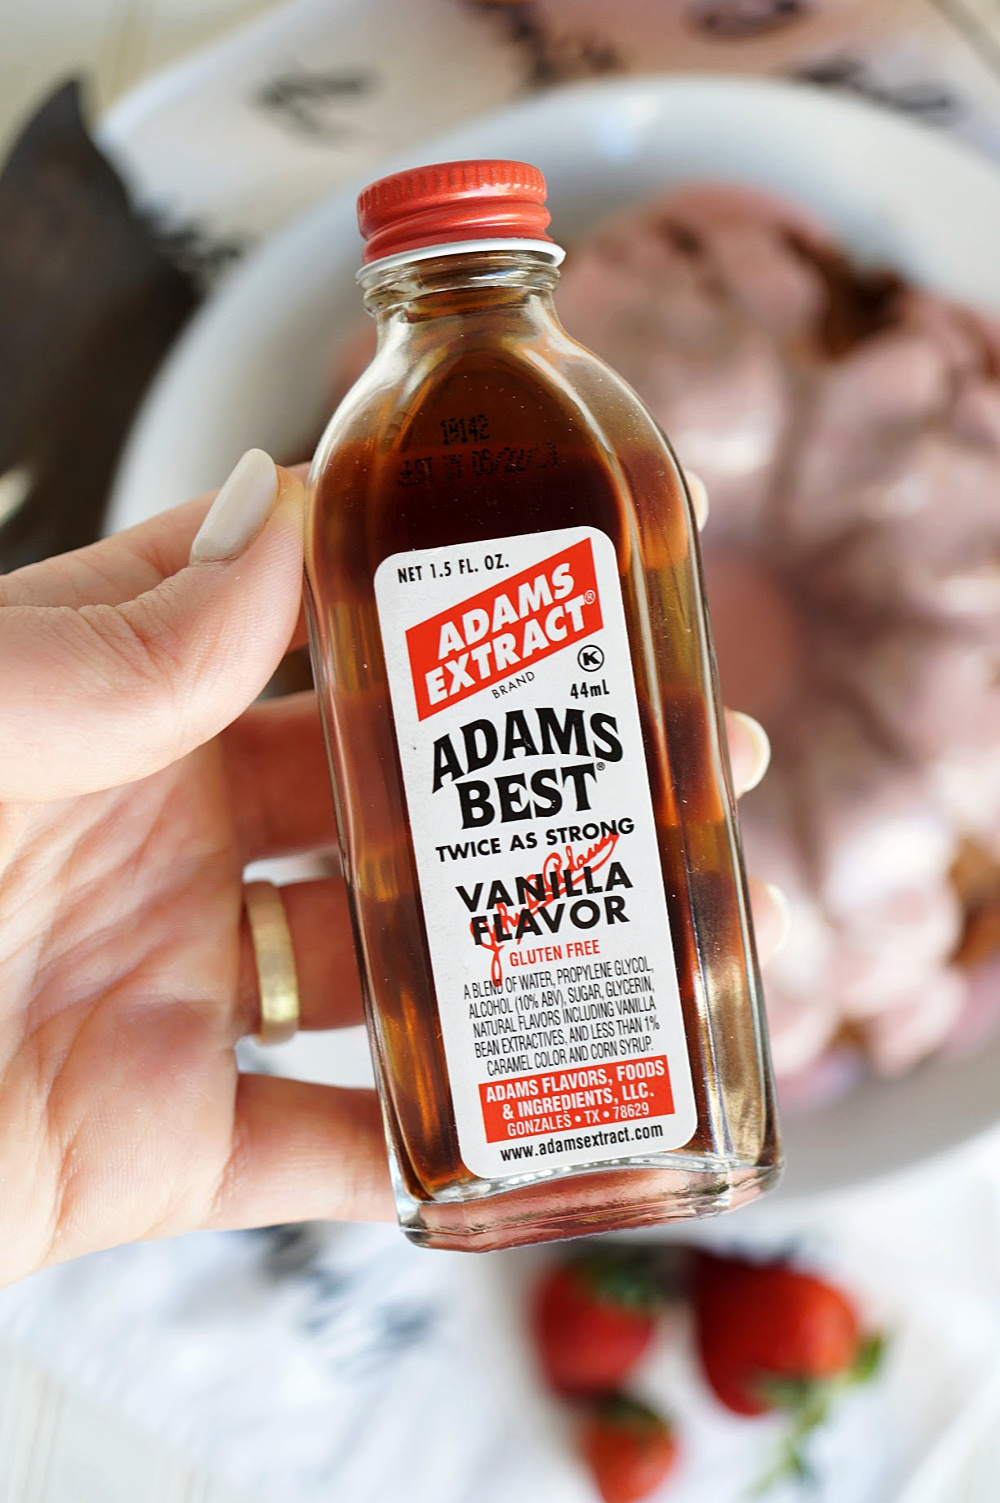 Adams vanilla extract